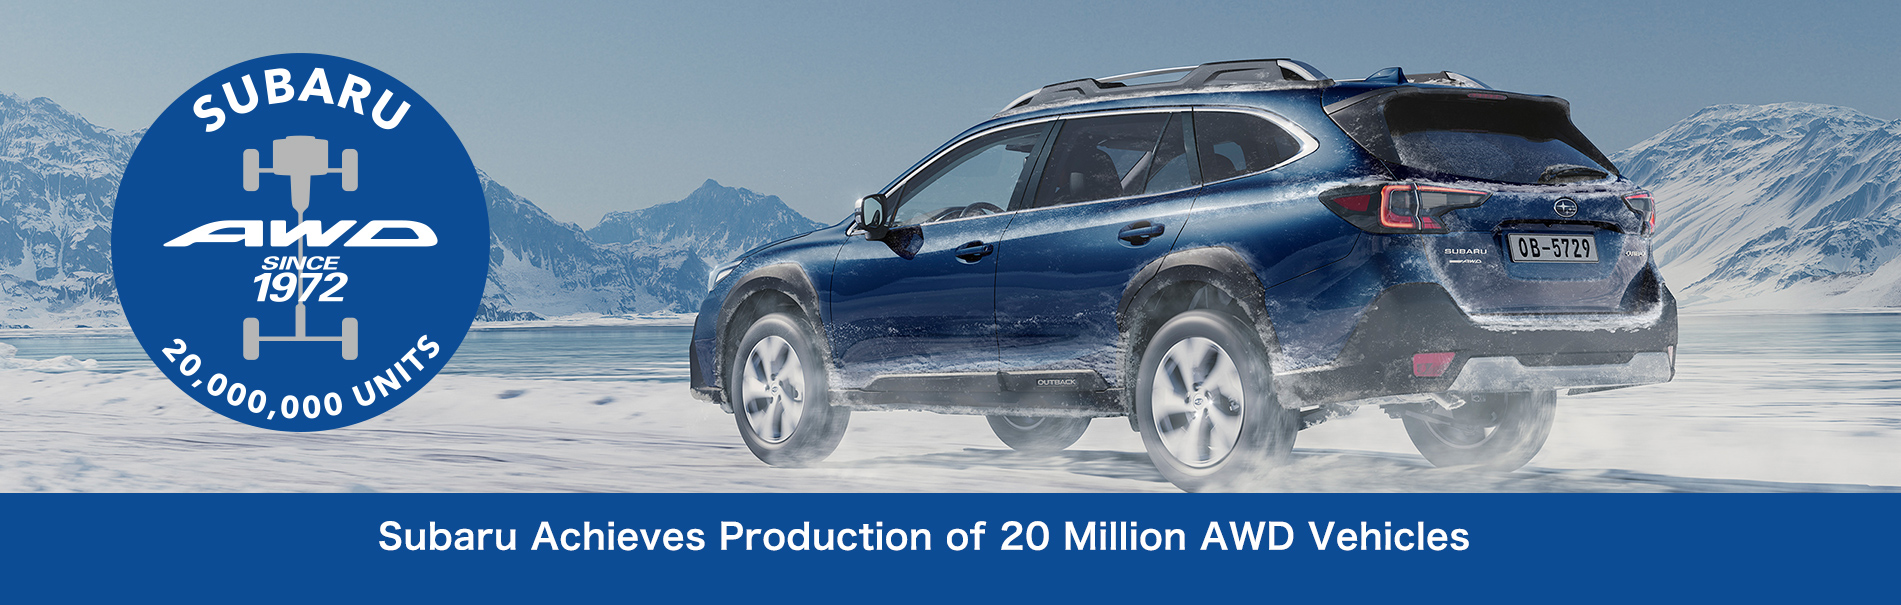 Subaru Achieves Production of 20 Million AWD Vehicles